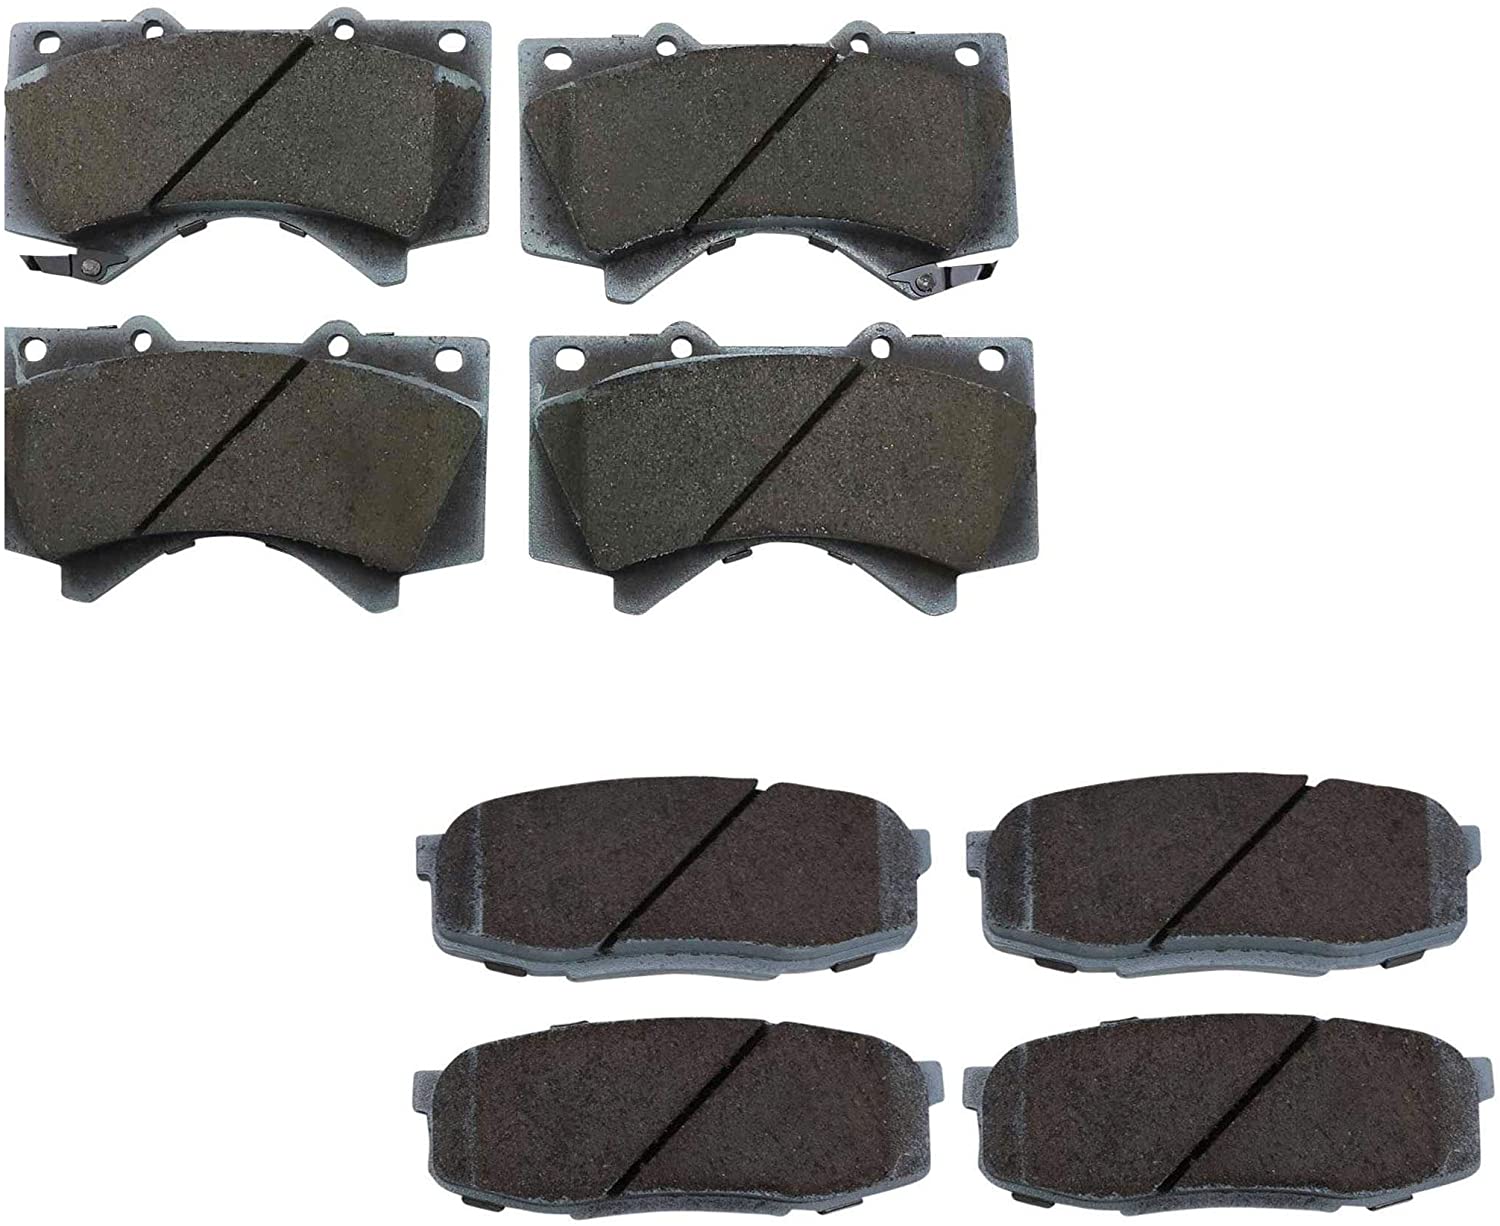 Beck-Arnley Ceramic Front & Rear Brake Pads Kit For LX570 Cruiser Sequoia Tundra